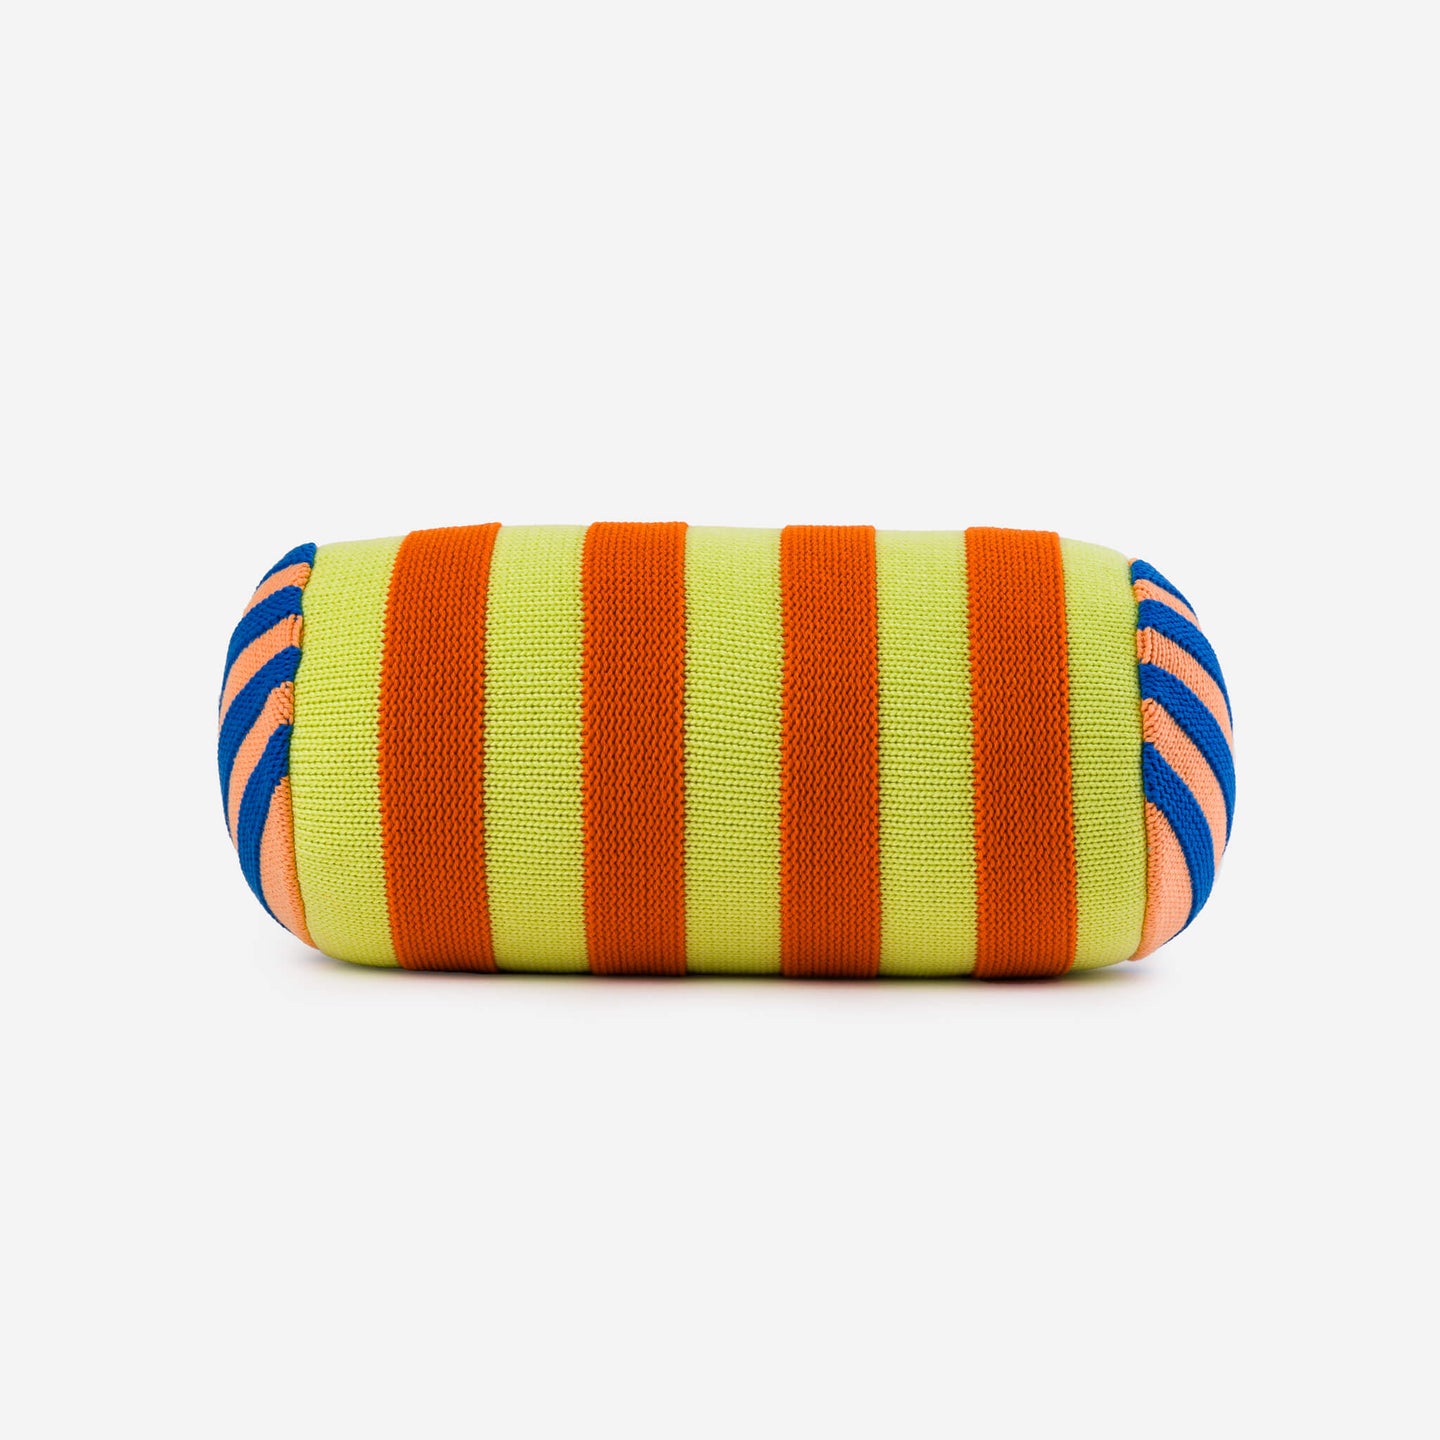 Super Stripe Knit Textured Stripes Bolster Pillow Accent